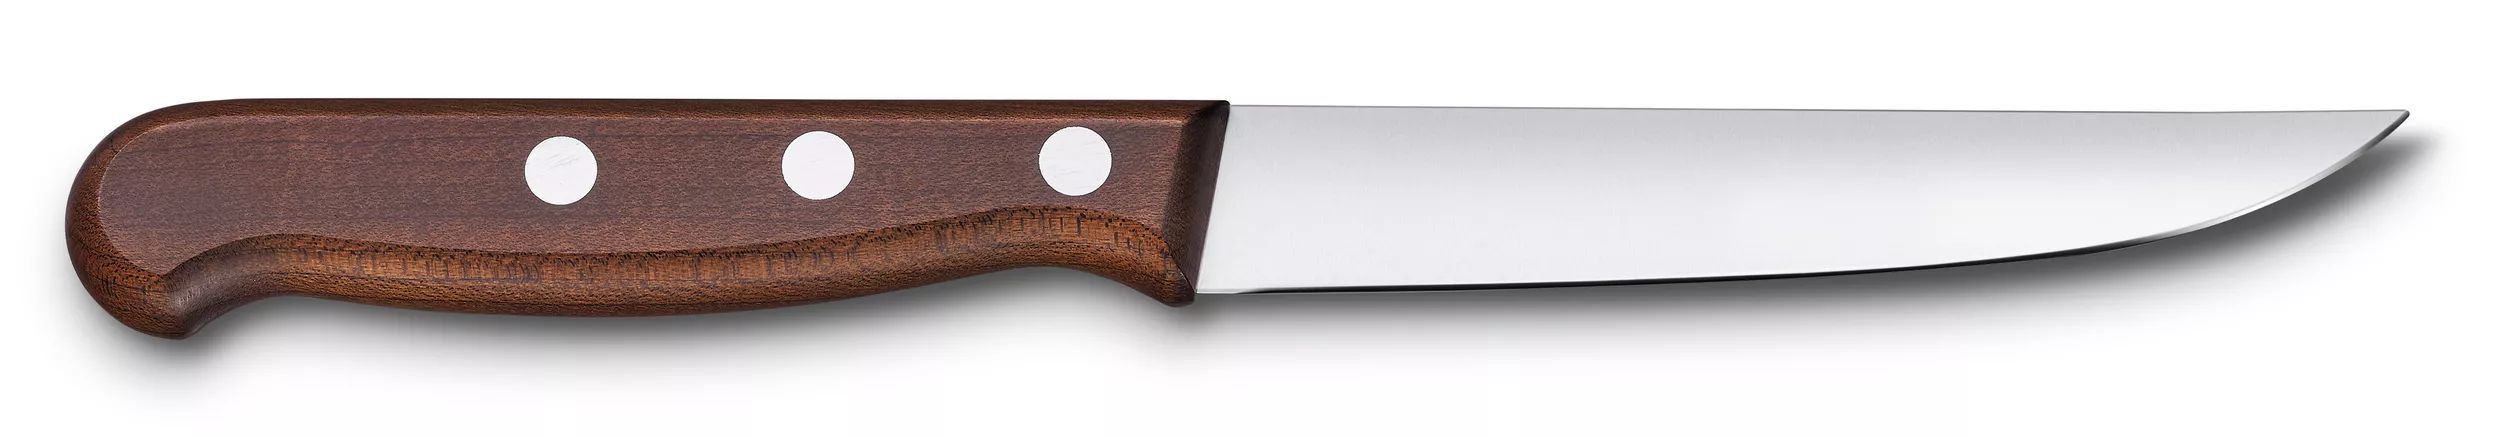 Set de cuchillos para bistec Wood, 2 piezas - 5.1200.12G